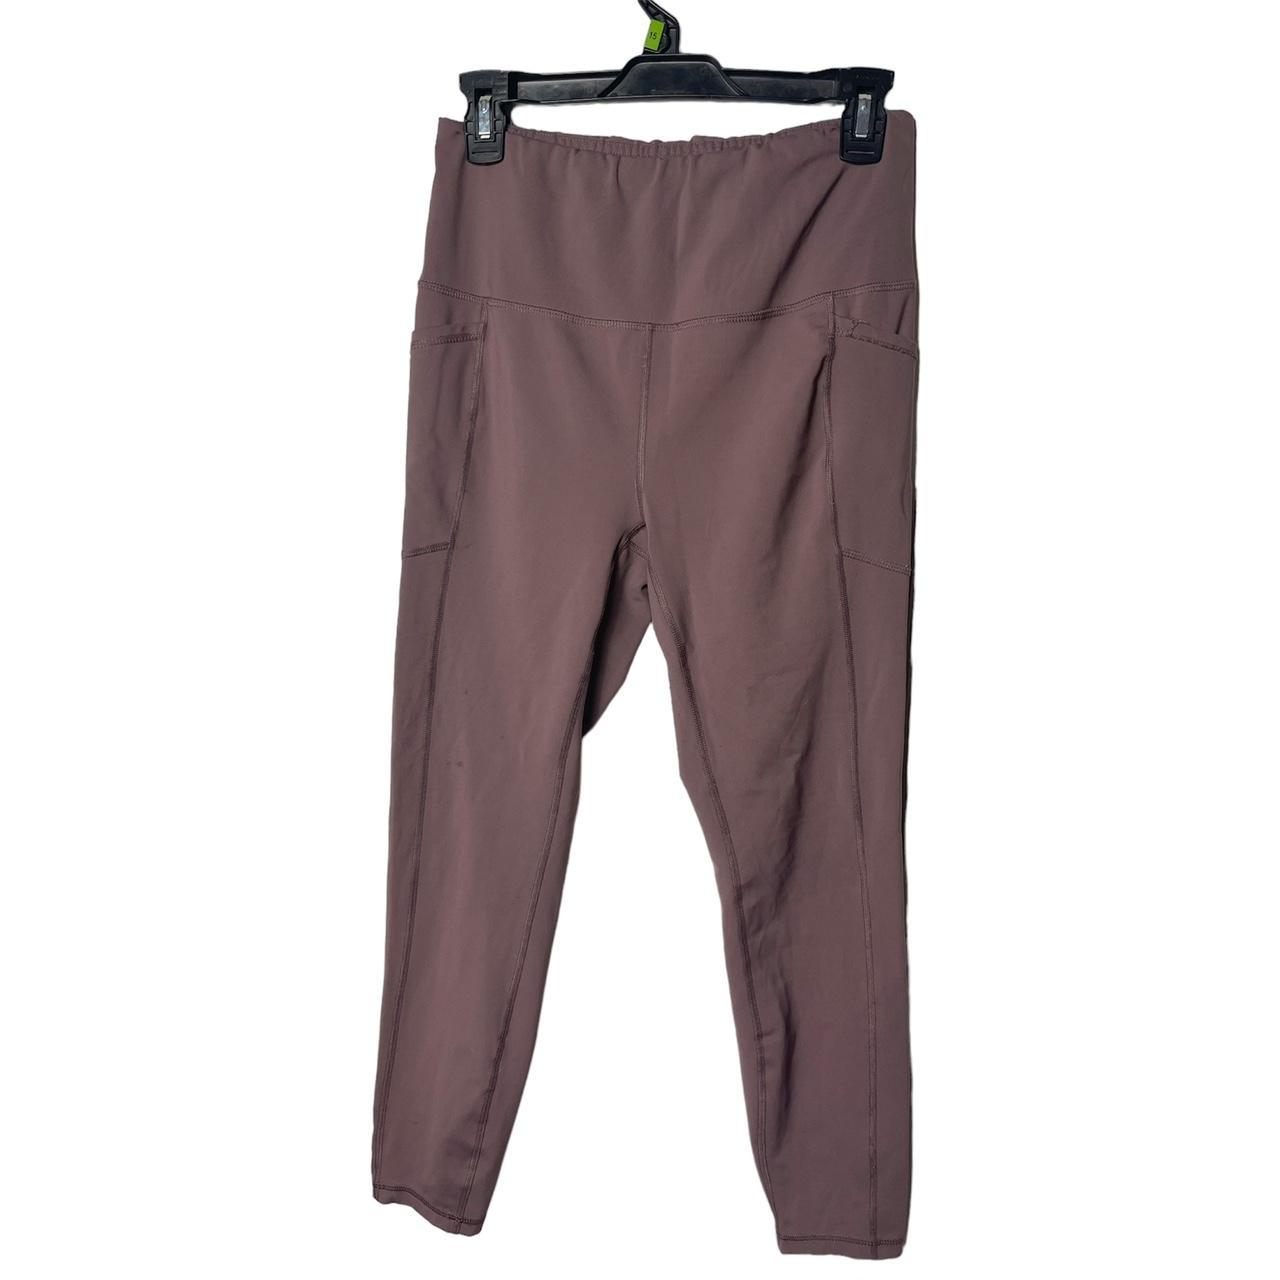 RBX Women's athletic pants/leggings Light purple - Depop